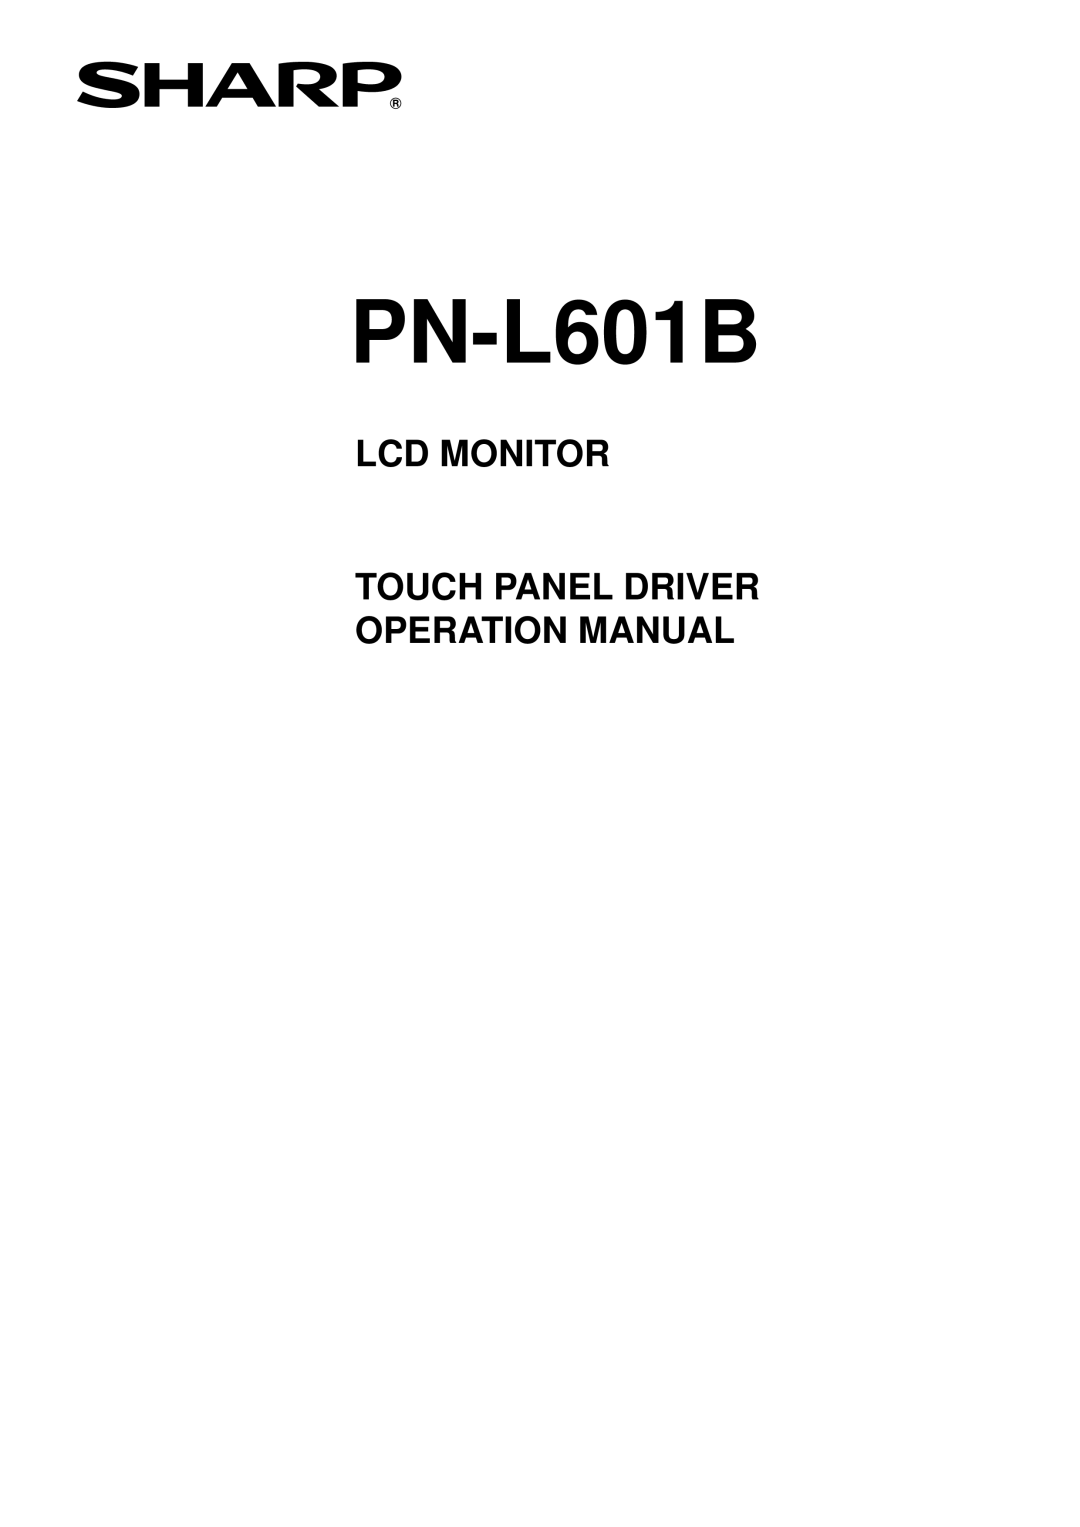 Sharp PNL601BPKG operation manual PN-L601B, Lcd Monitor, Touch Panel Driver Operation Manual 